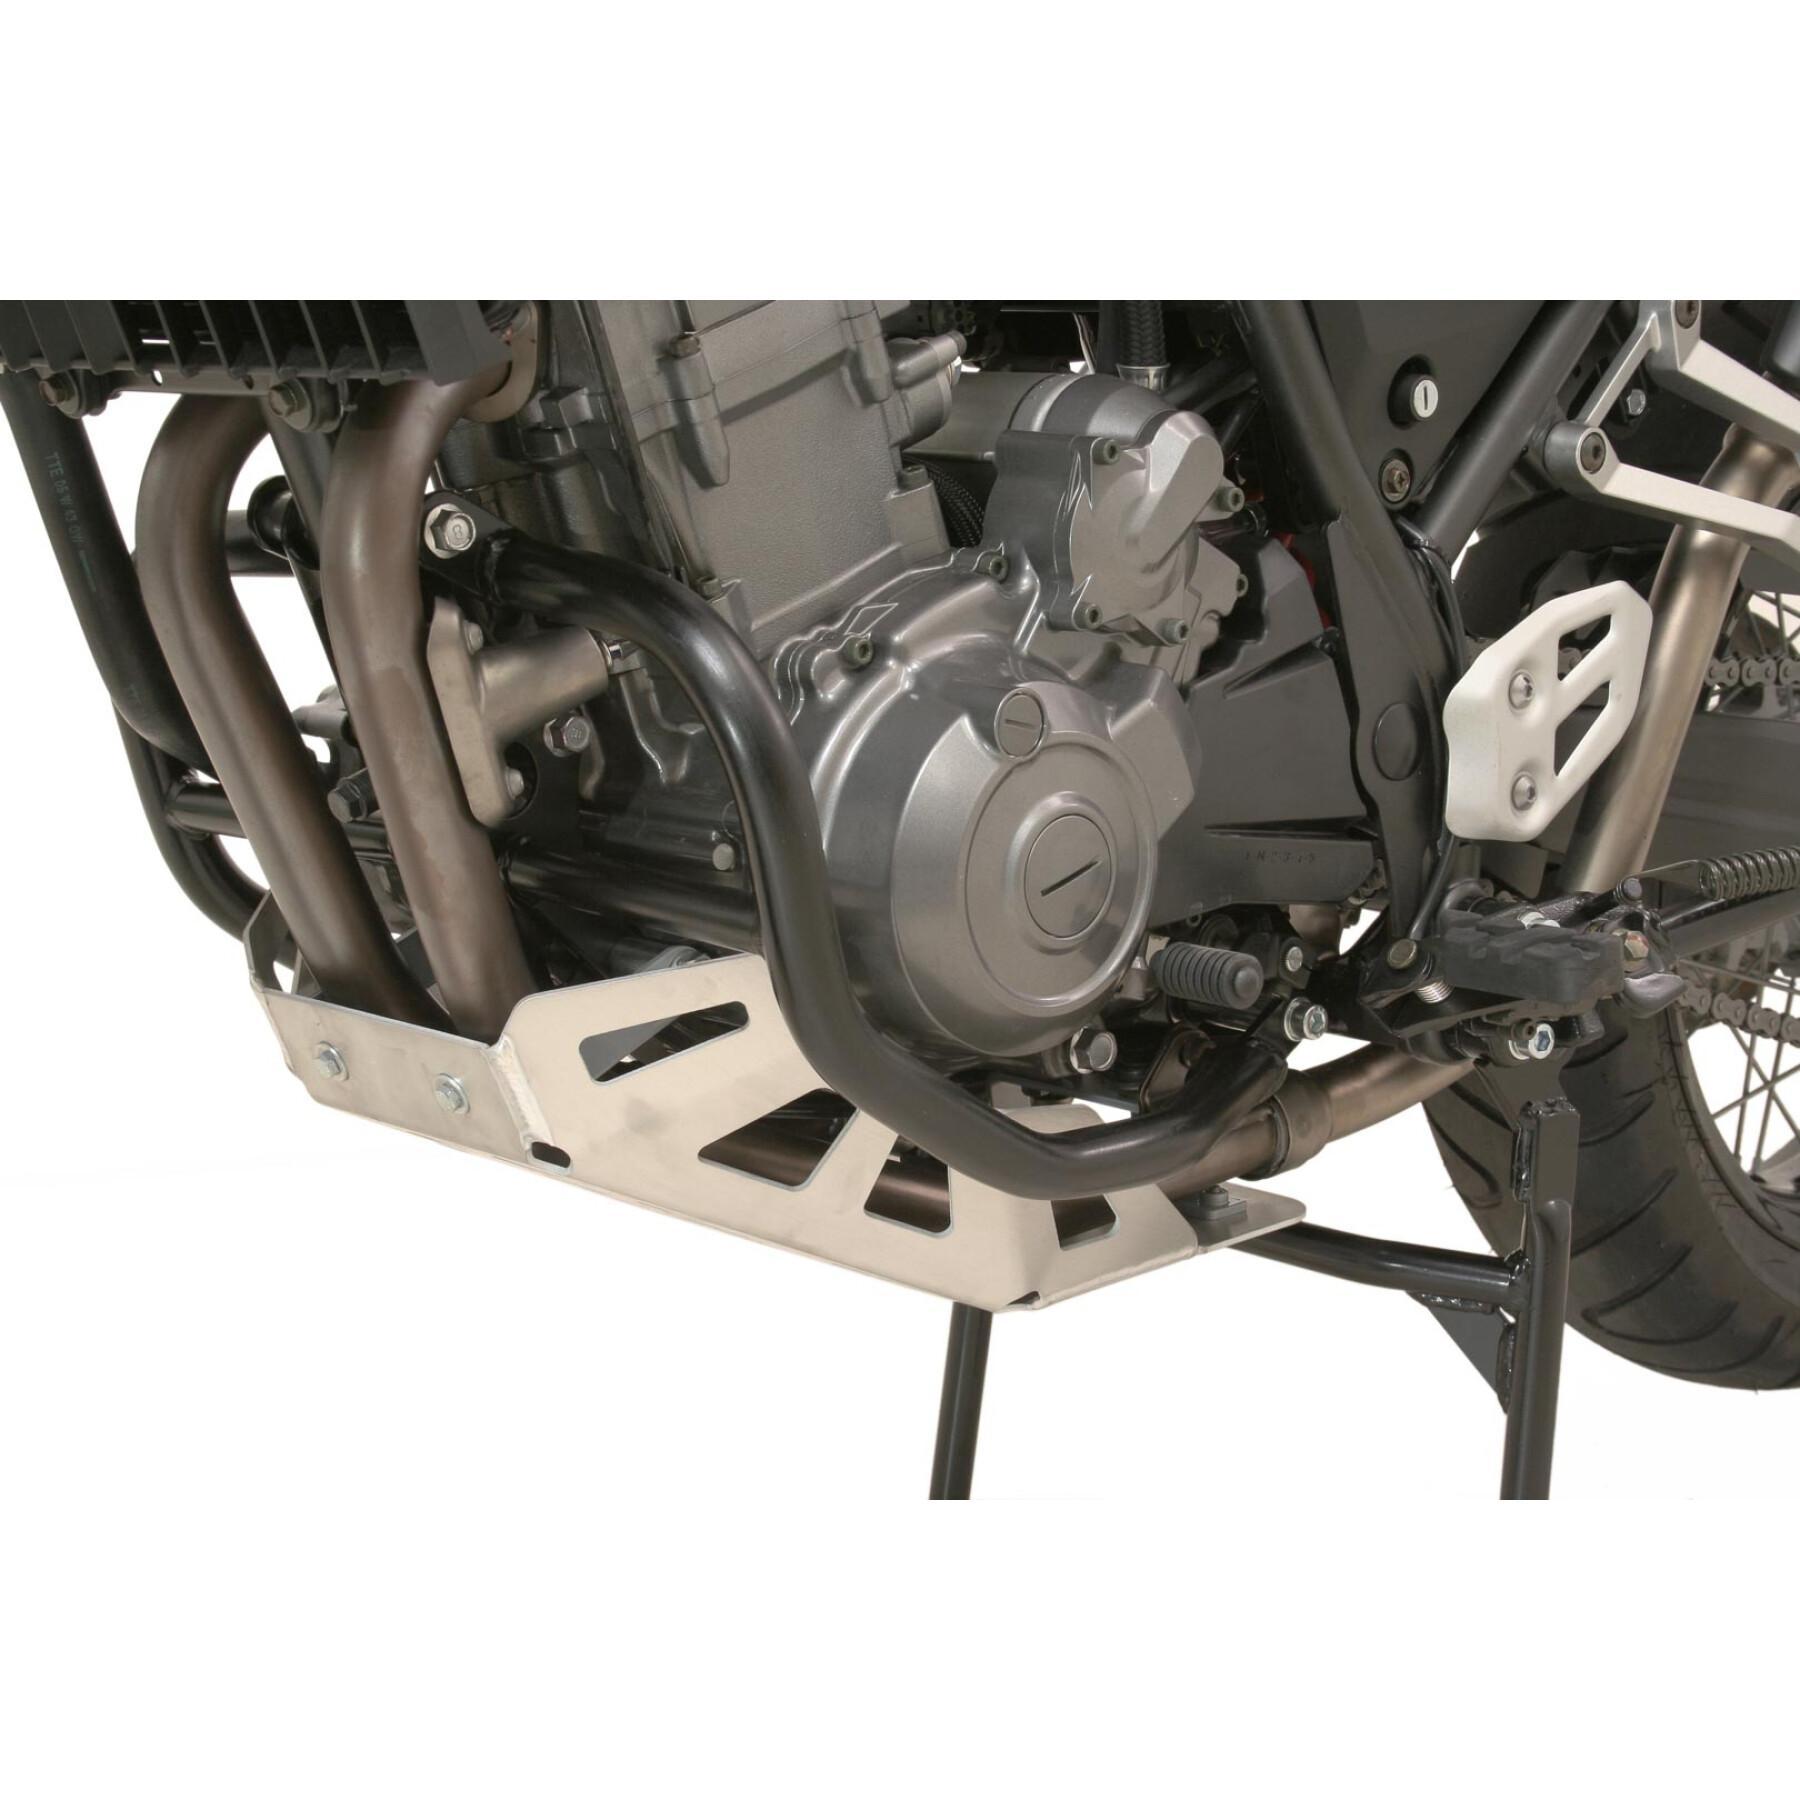 Motorcykelvakter Sw-Motech Crashbar Yamaha Xt 660 R / X (04-)